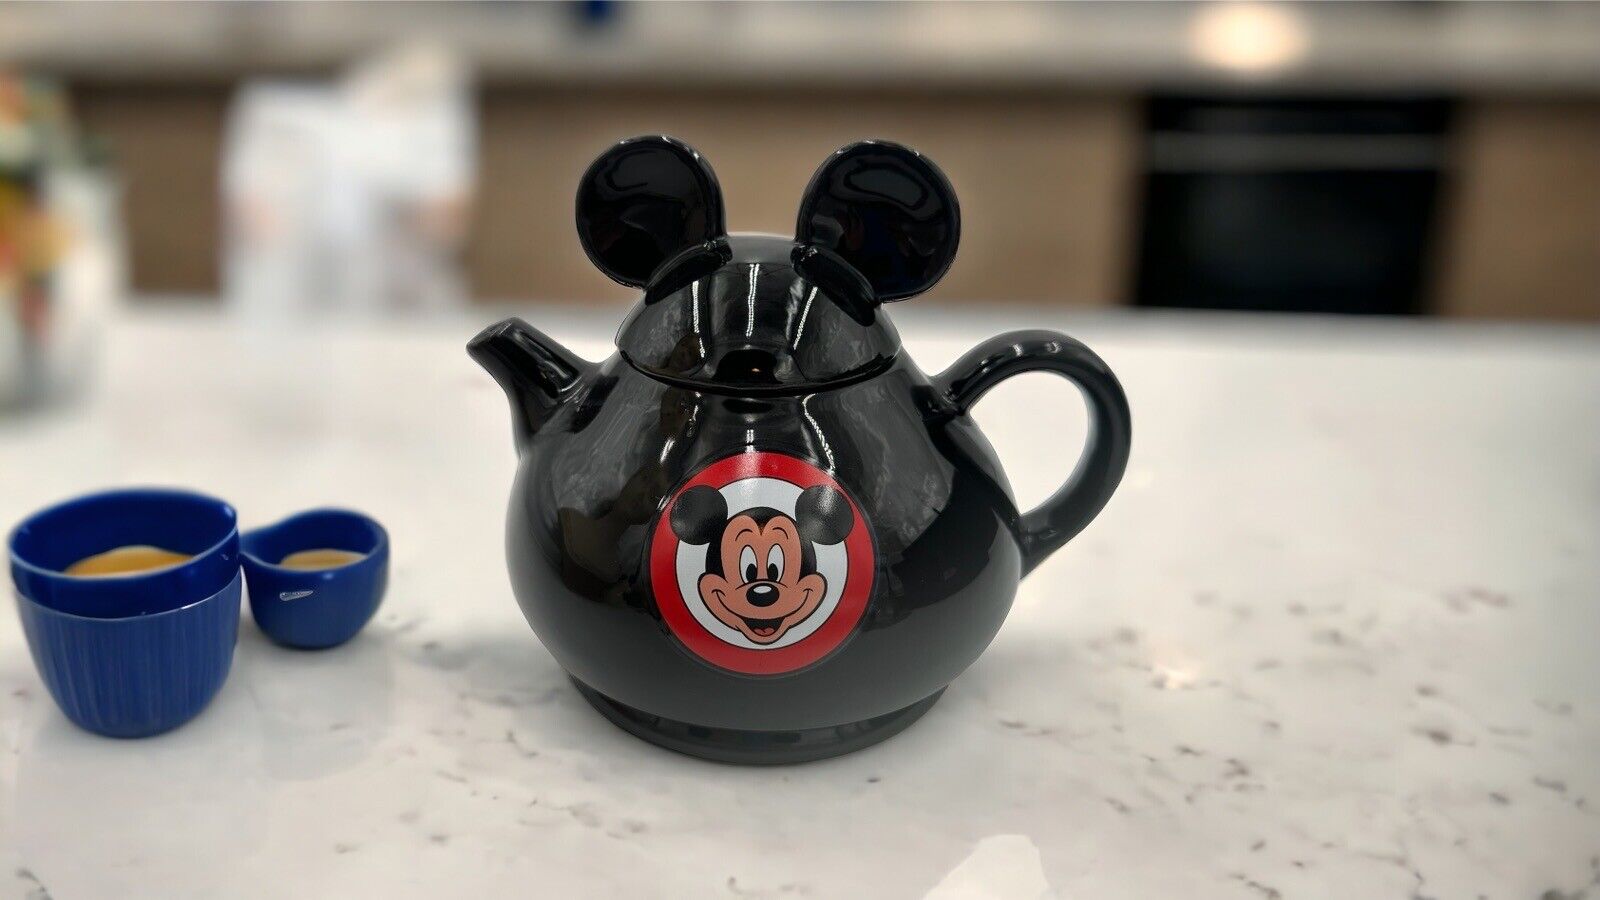 Mickey Mouse ceramic tea pot Applause   2000s Disney